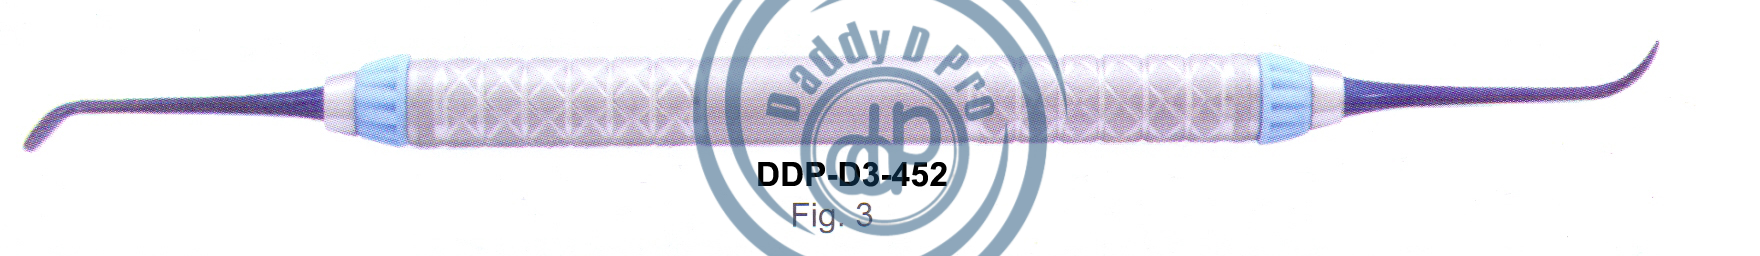 images/DDP-D3-452.png